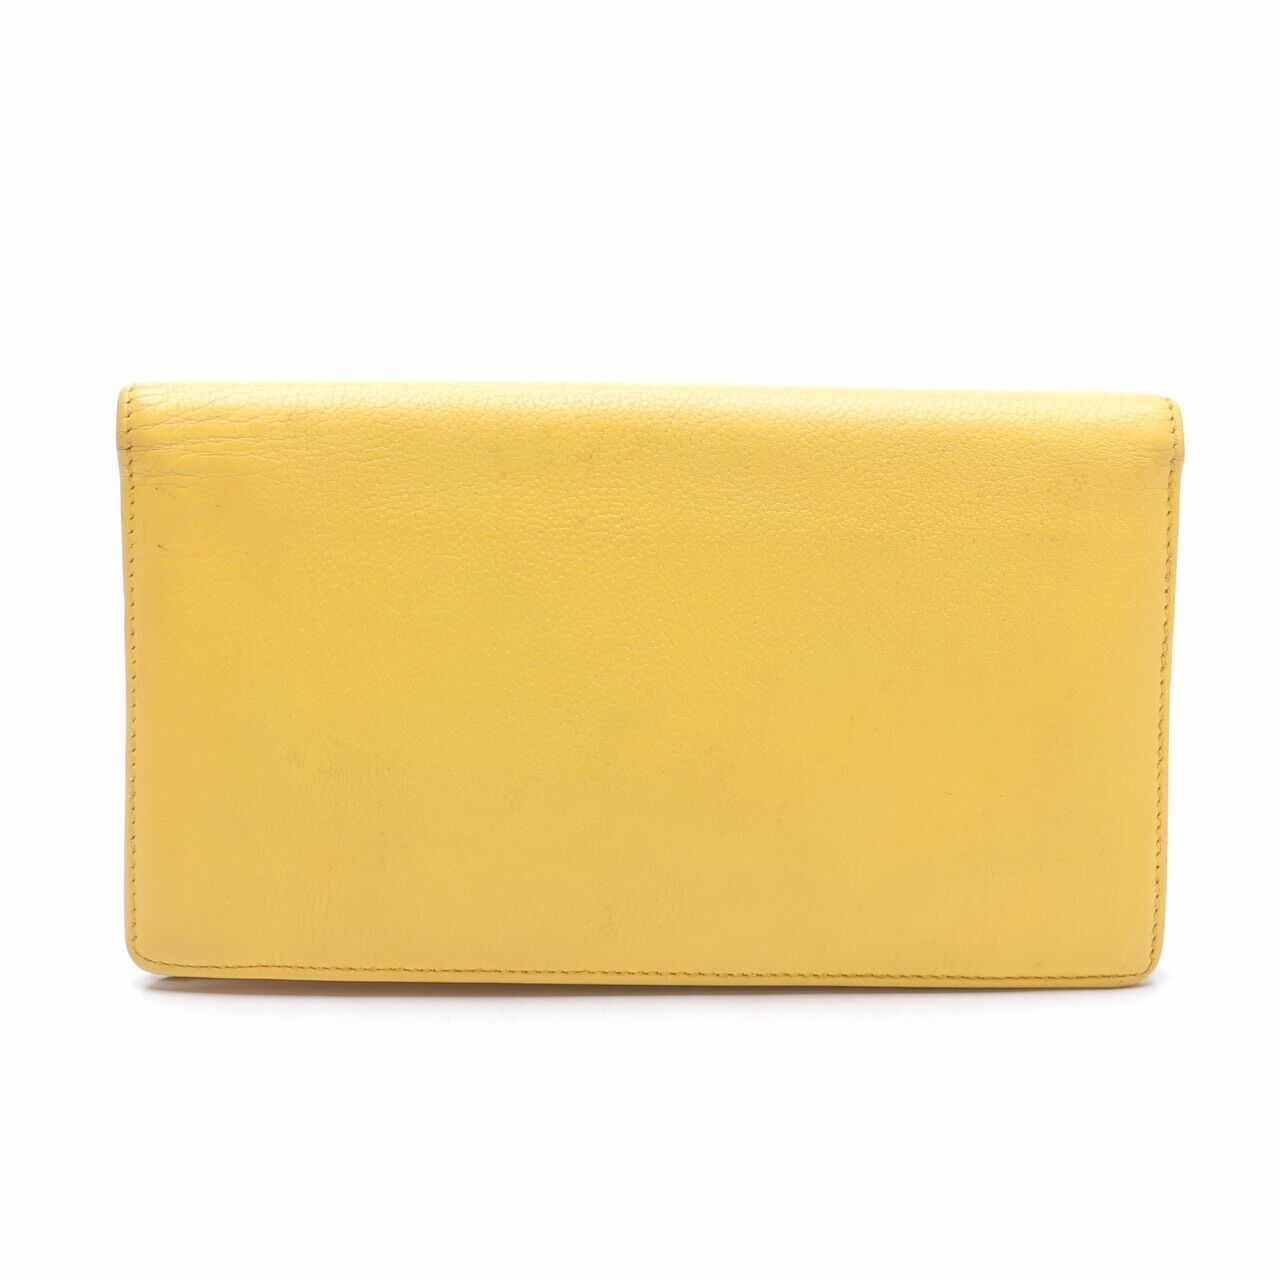 Chanel Leather Camellia Yen Yellow Wallet